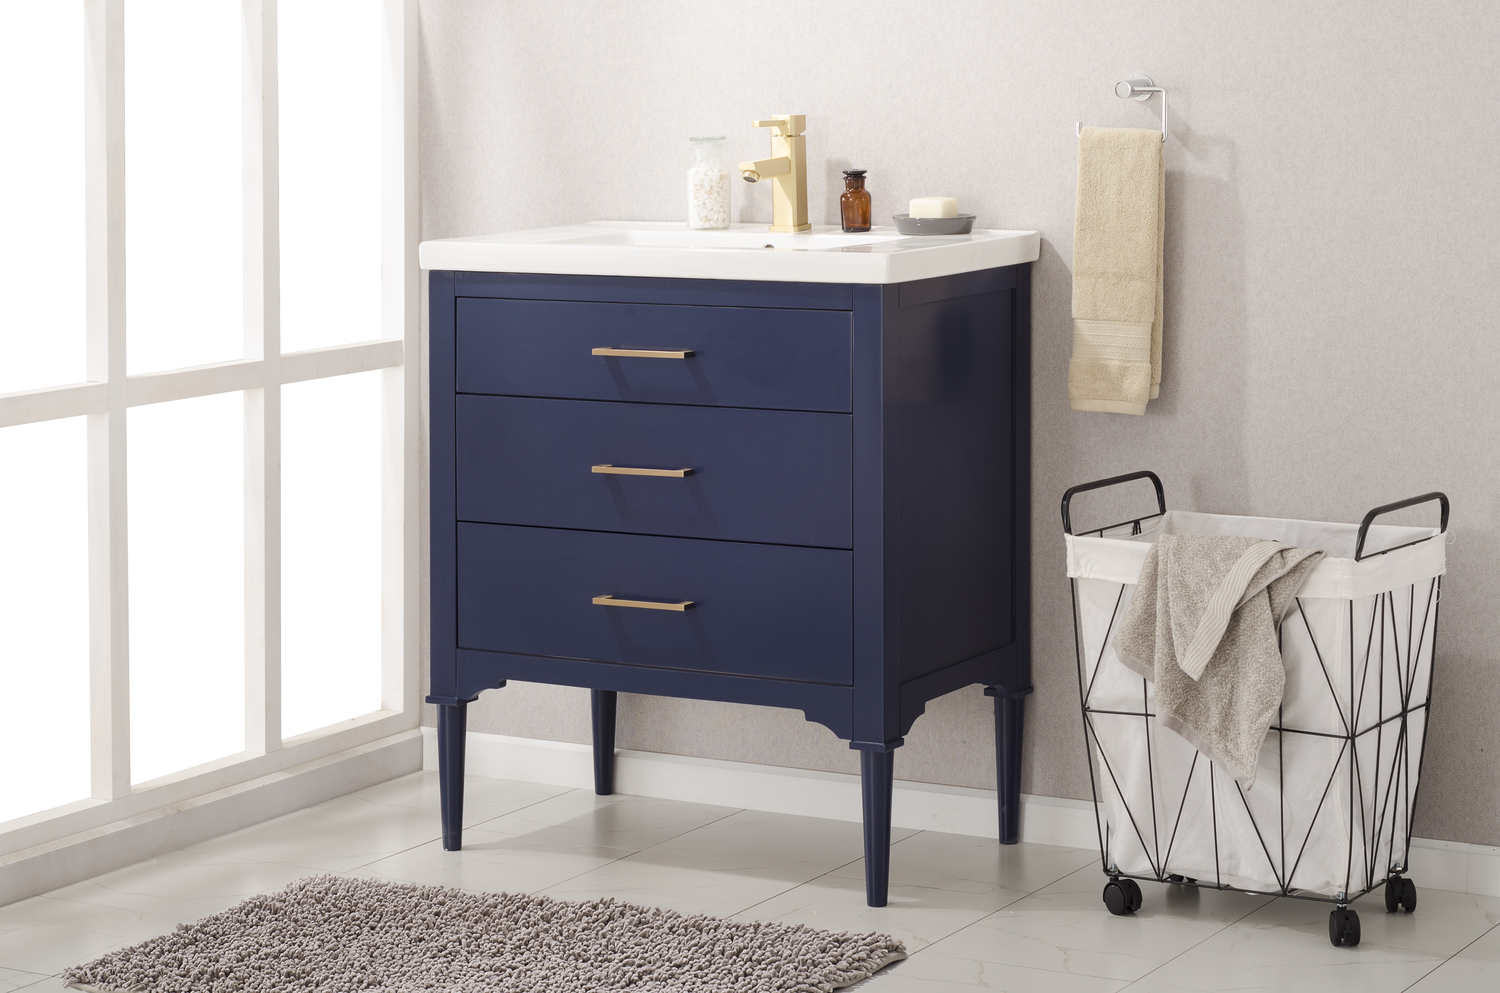 rustic bathroom cabinet ideas Design Element Bathroom Vanity Blue Transitional